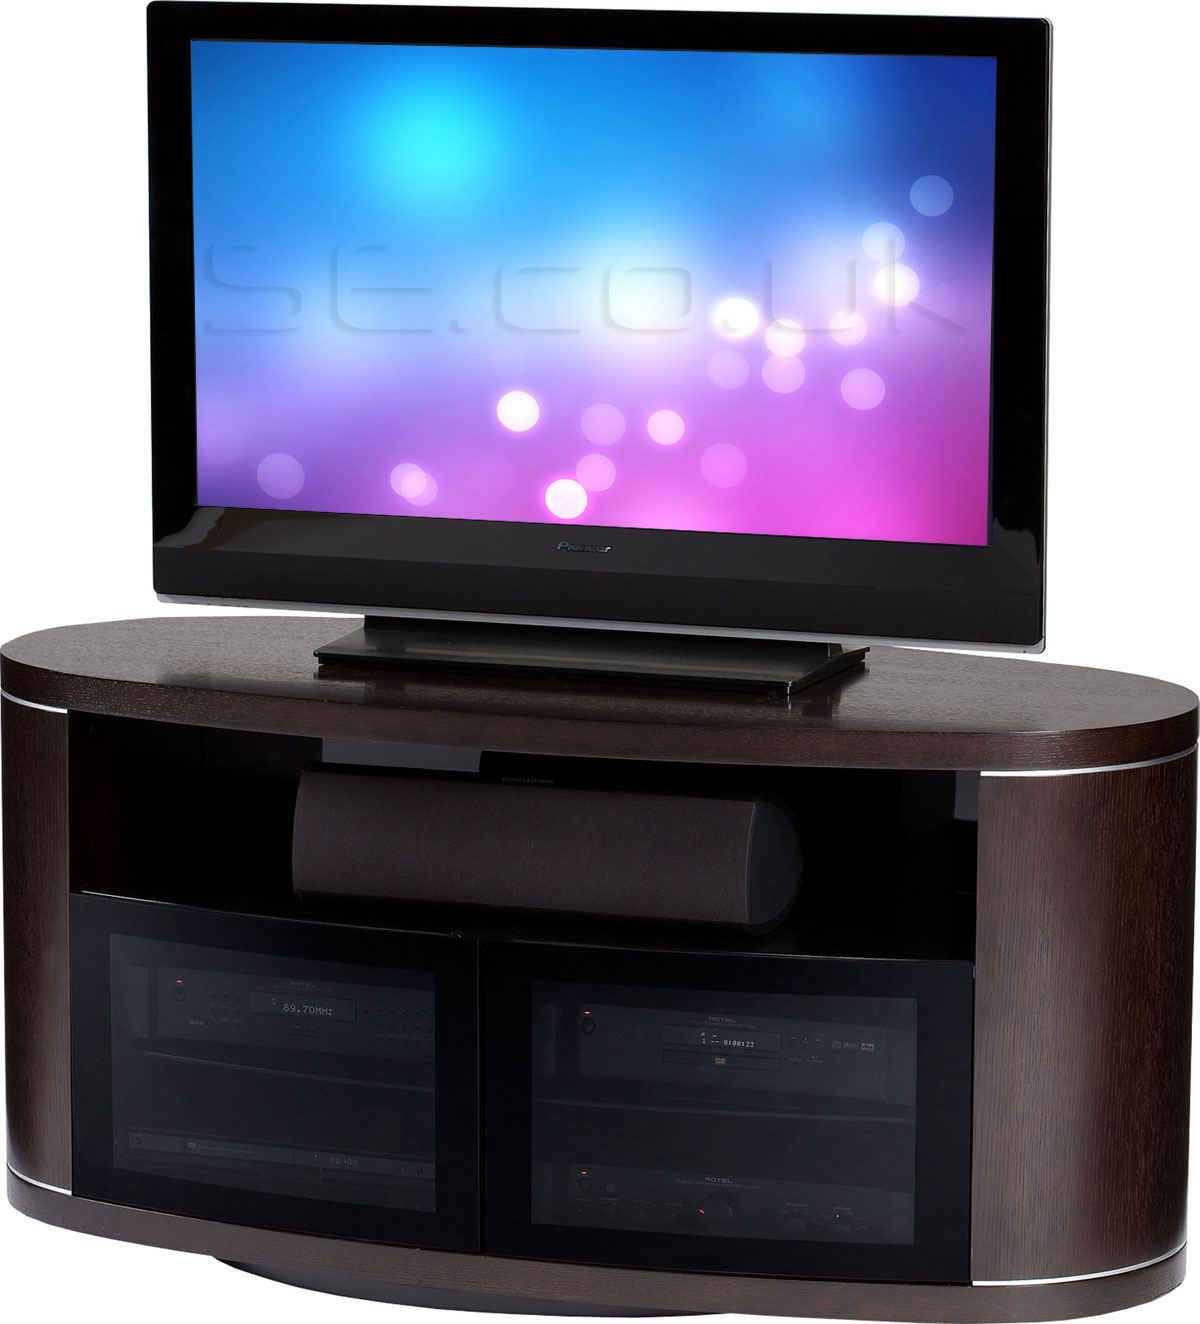 Revo 9981 Oak LED and LCD TV Stand `Revo